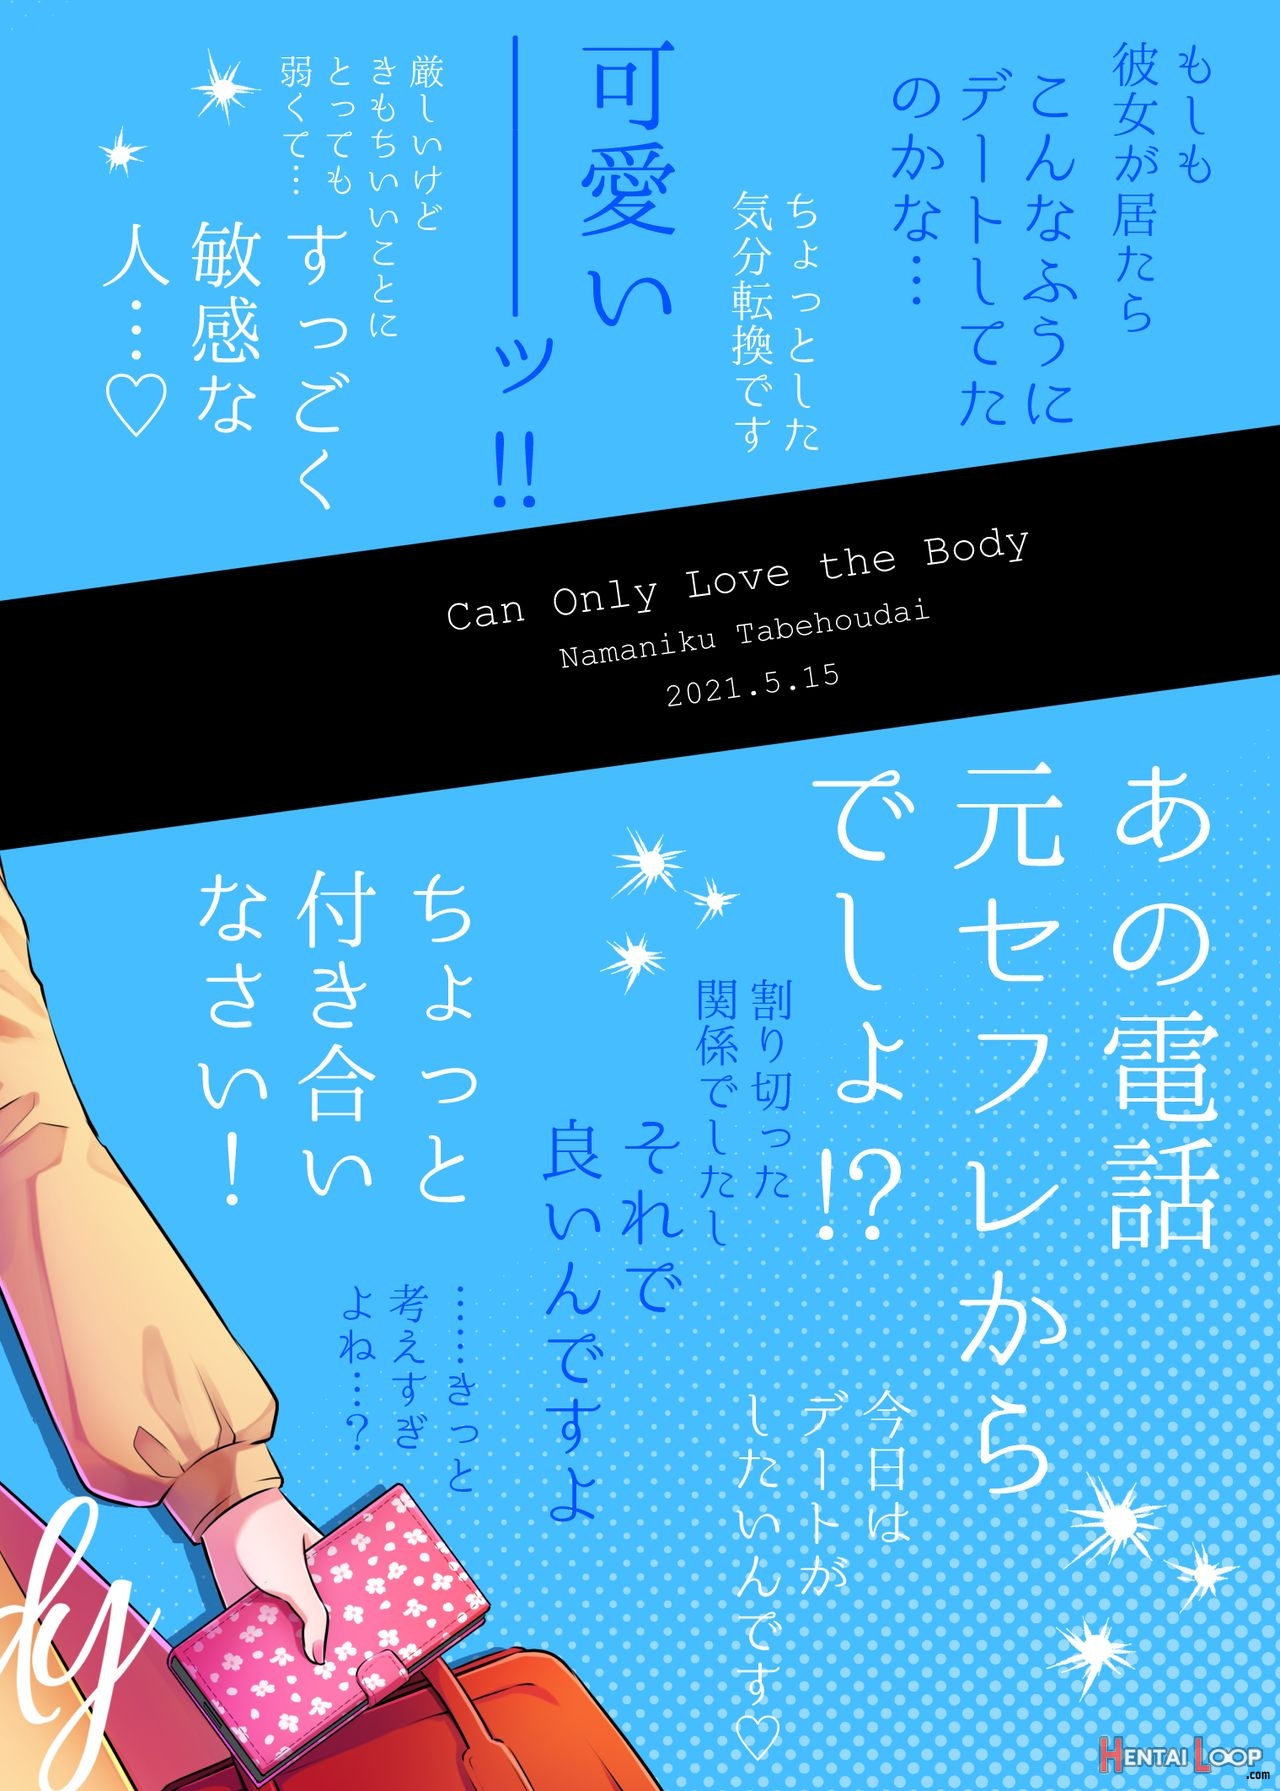 Aishite Ii No Wa, Karada Dake 3 - Can Only Love The Body page 2